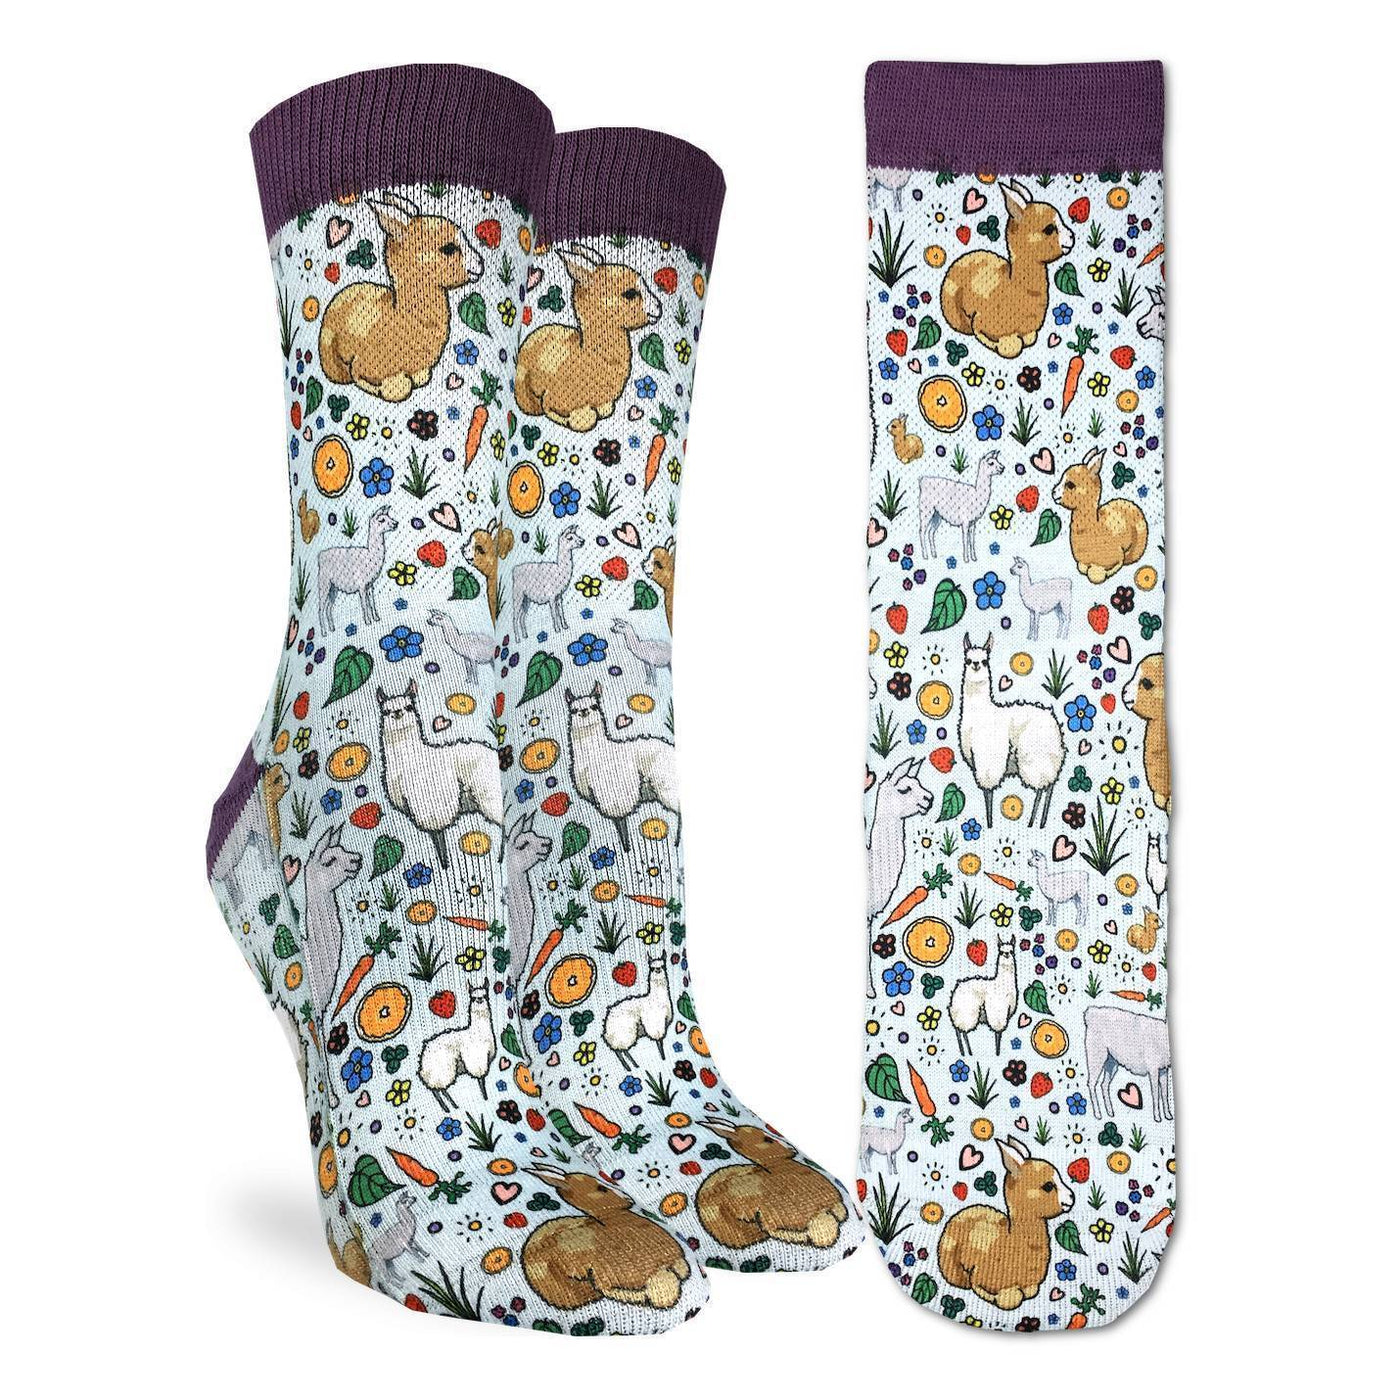 "Floral Llamas" Crew Socks by Good Luck Sock - Medium